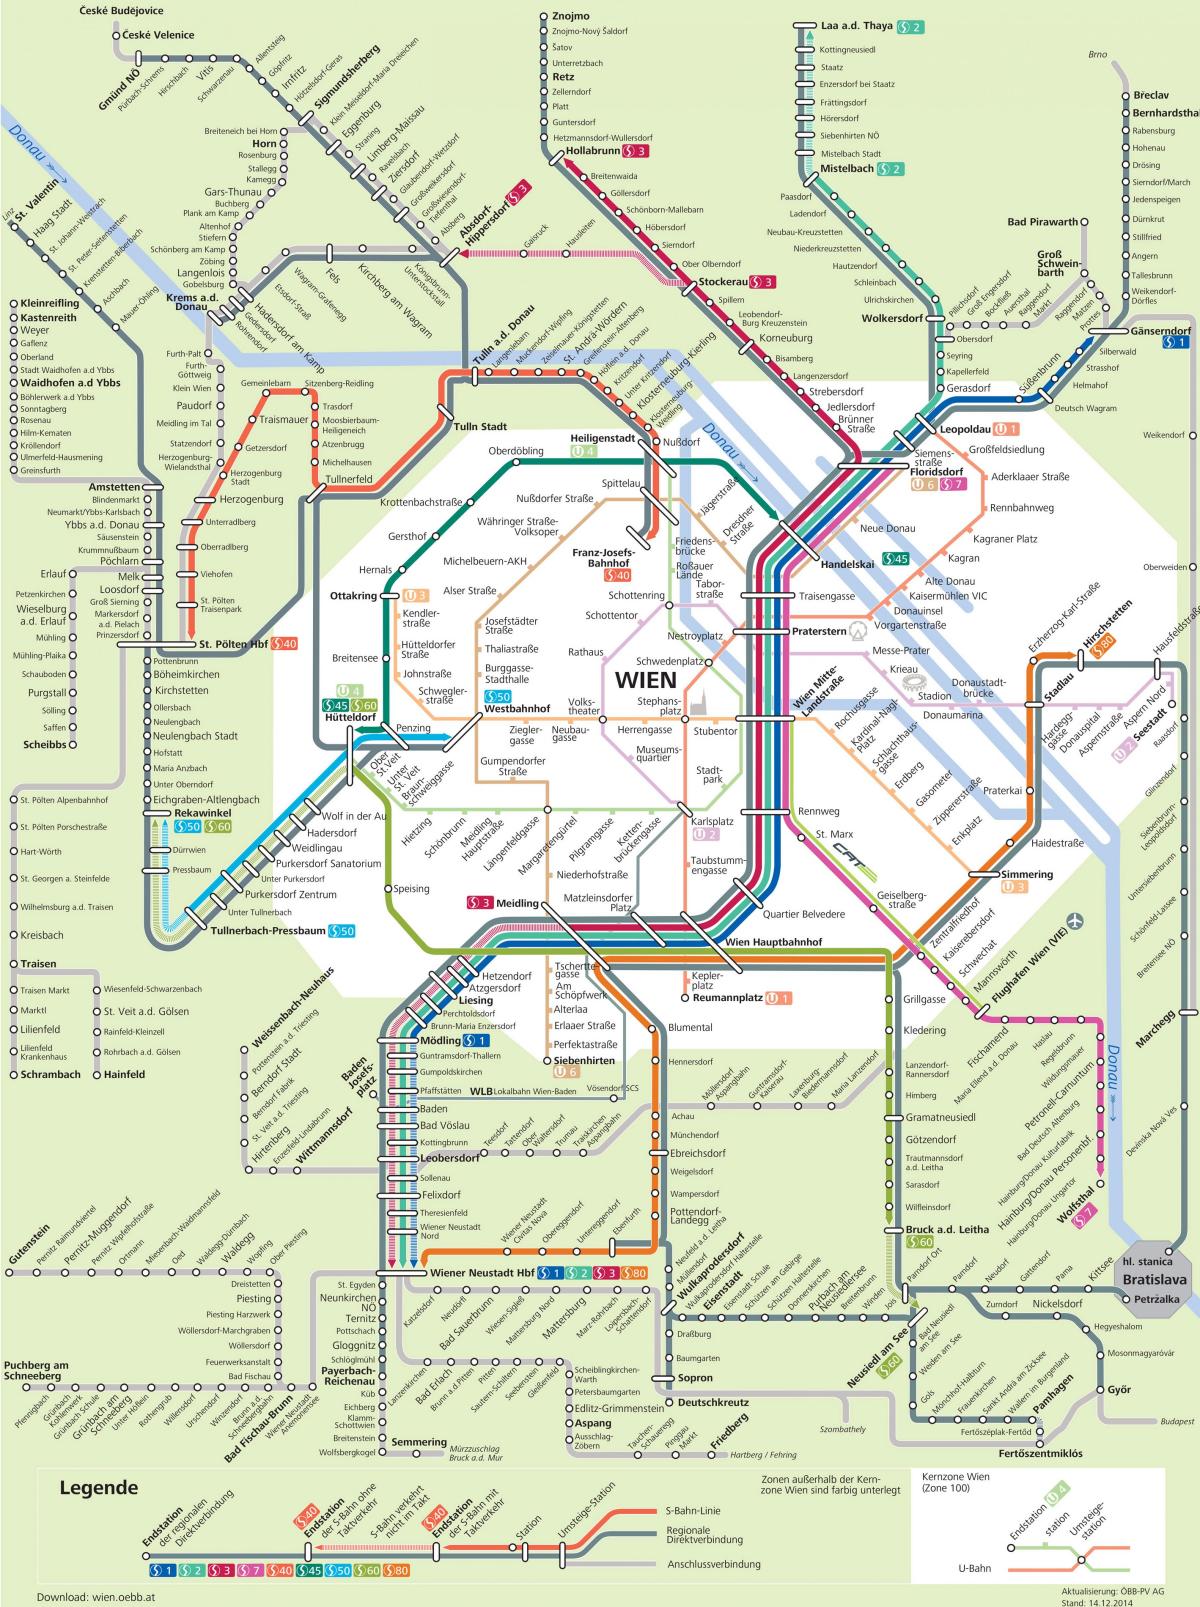 Viyana haritası s7 rota